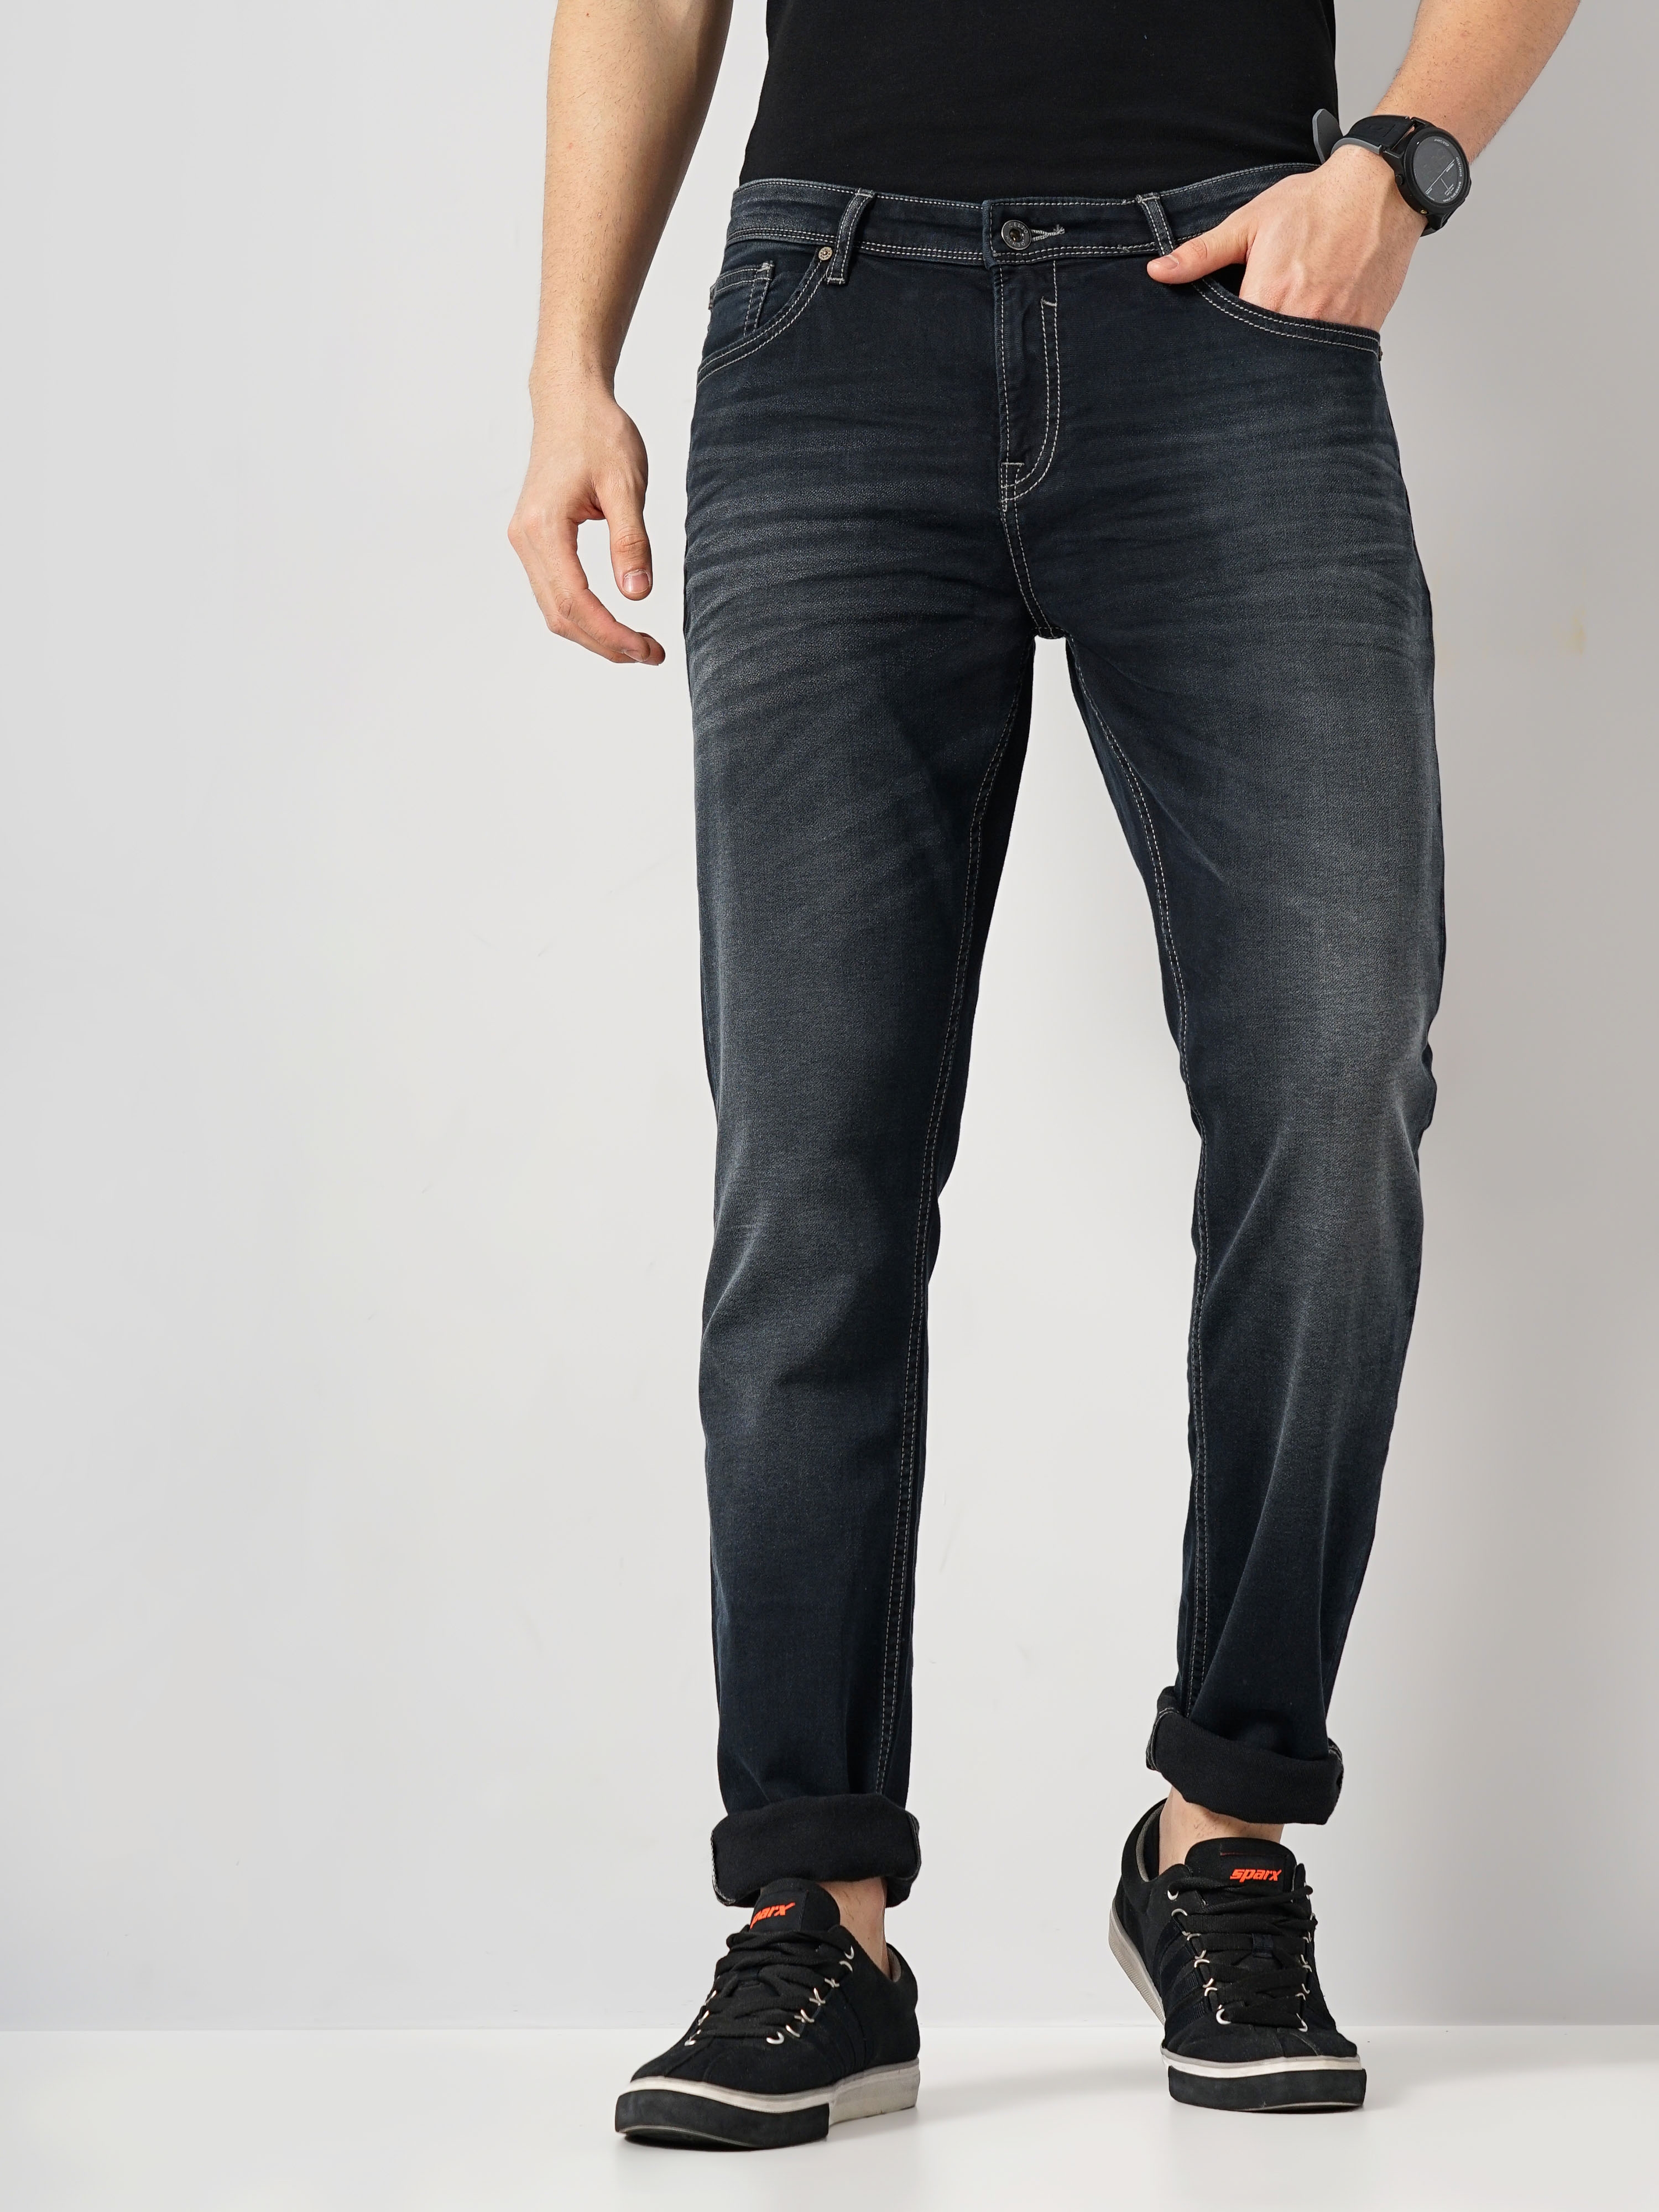 Buy Black Super Slim Fit Denim Deluxe Stretch Jeans Online at Muftijeans